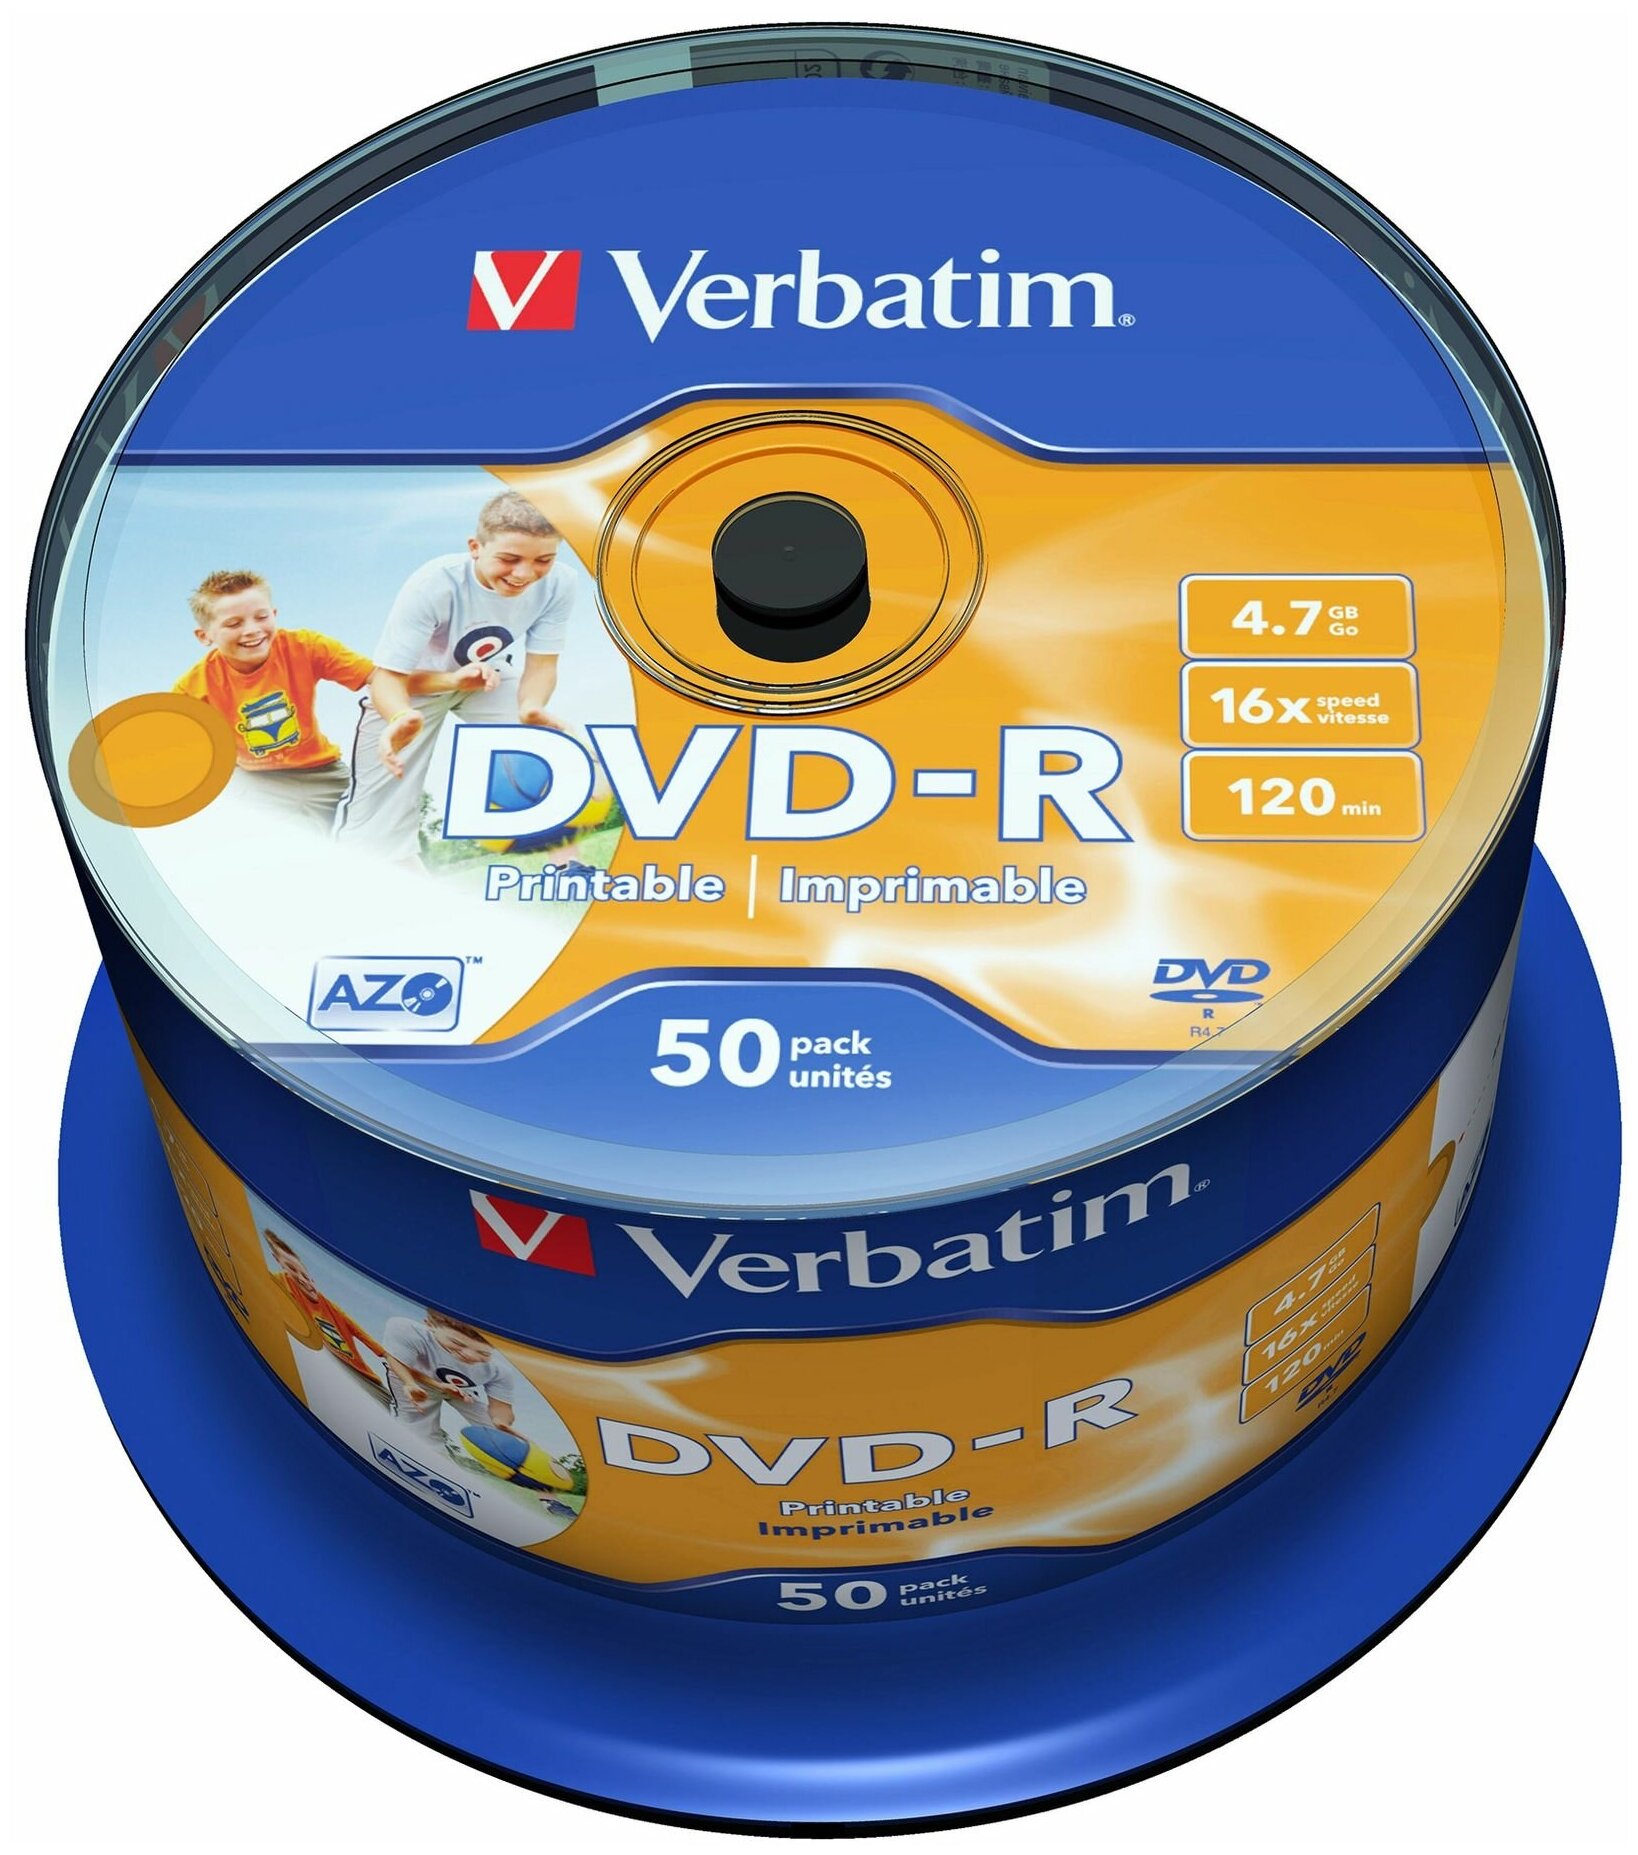 Диск DVD-R Verbatim 47Gb 16x Printable cake 50 шт. (43533)